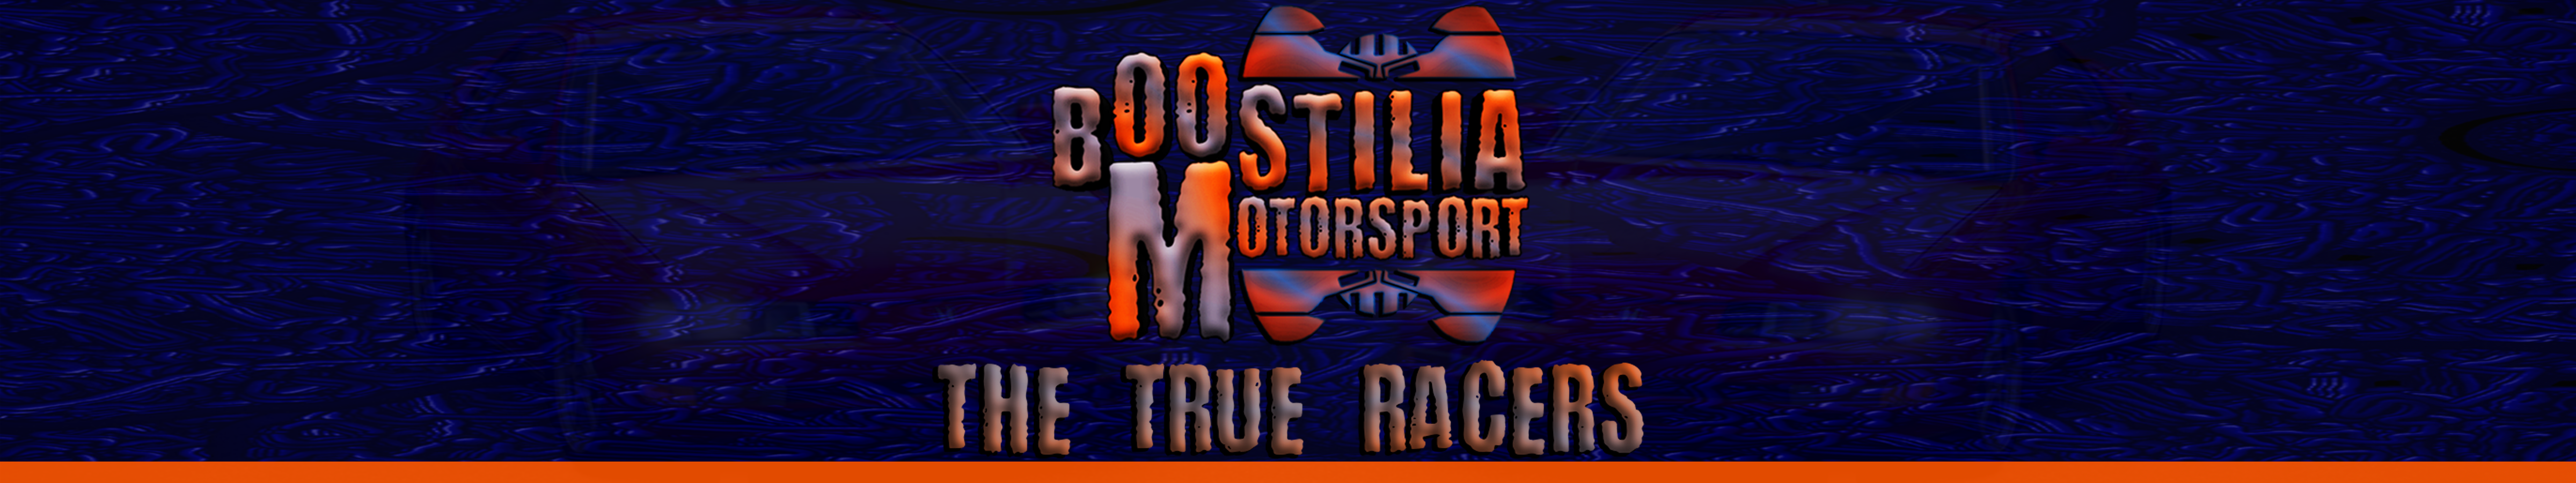 New Boostilia Motorsport Desktop Wallpaper